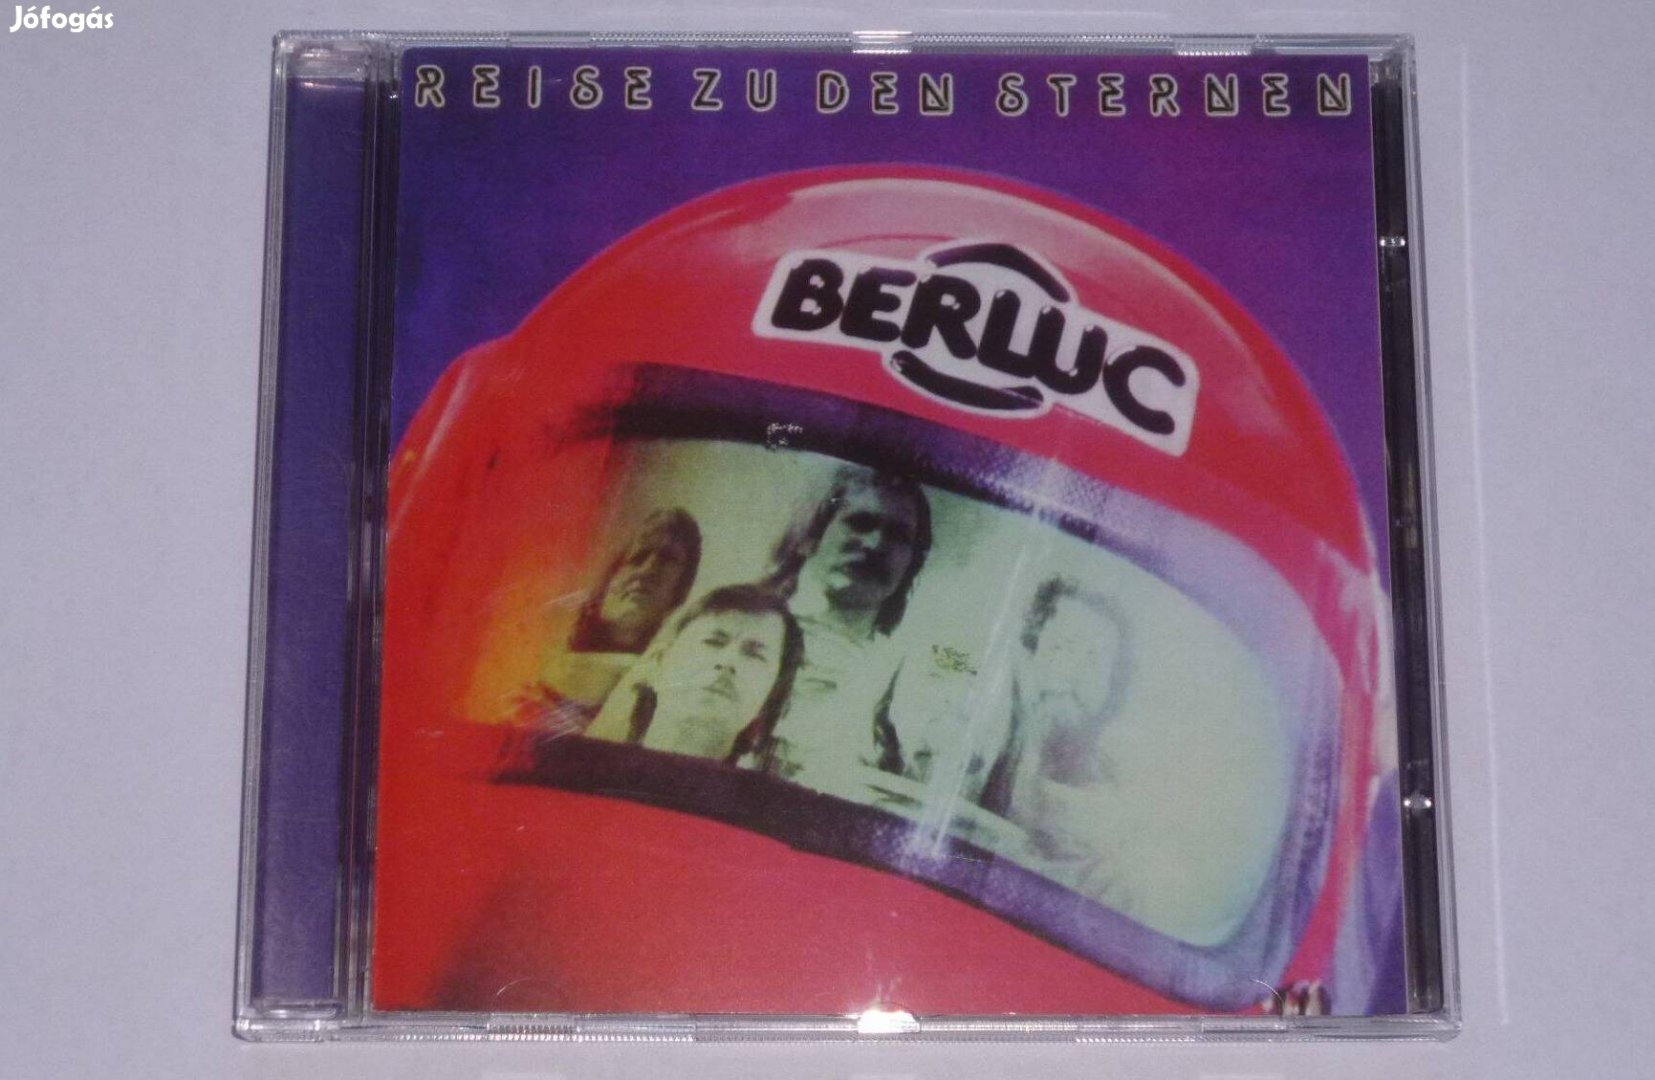 Berluc - Reise Zu Den Sternen CD Democratic Rock ( DDR Prog Rock )